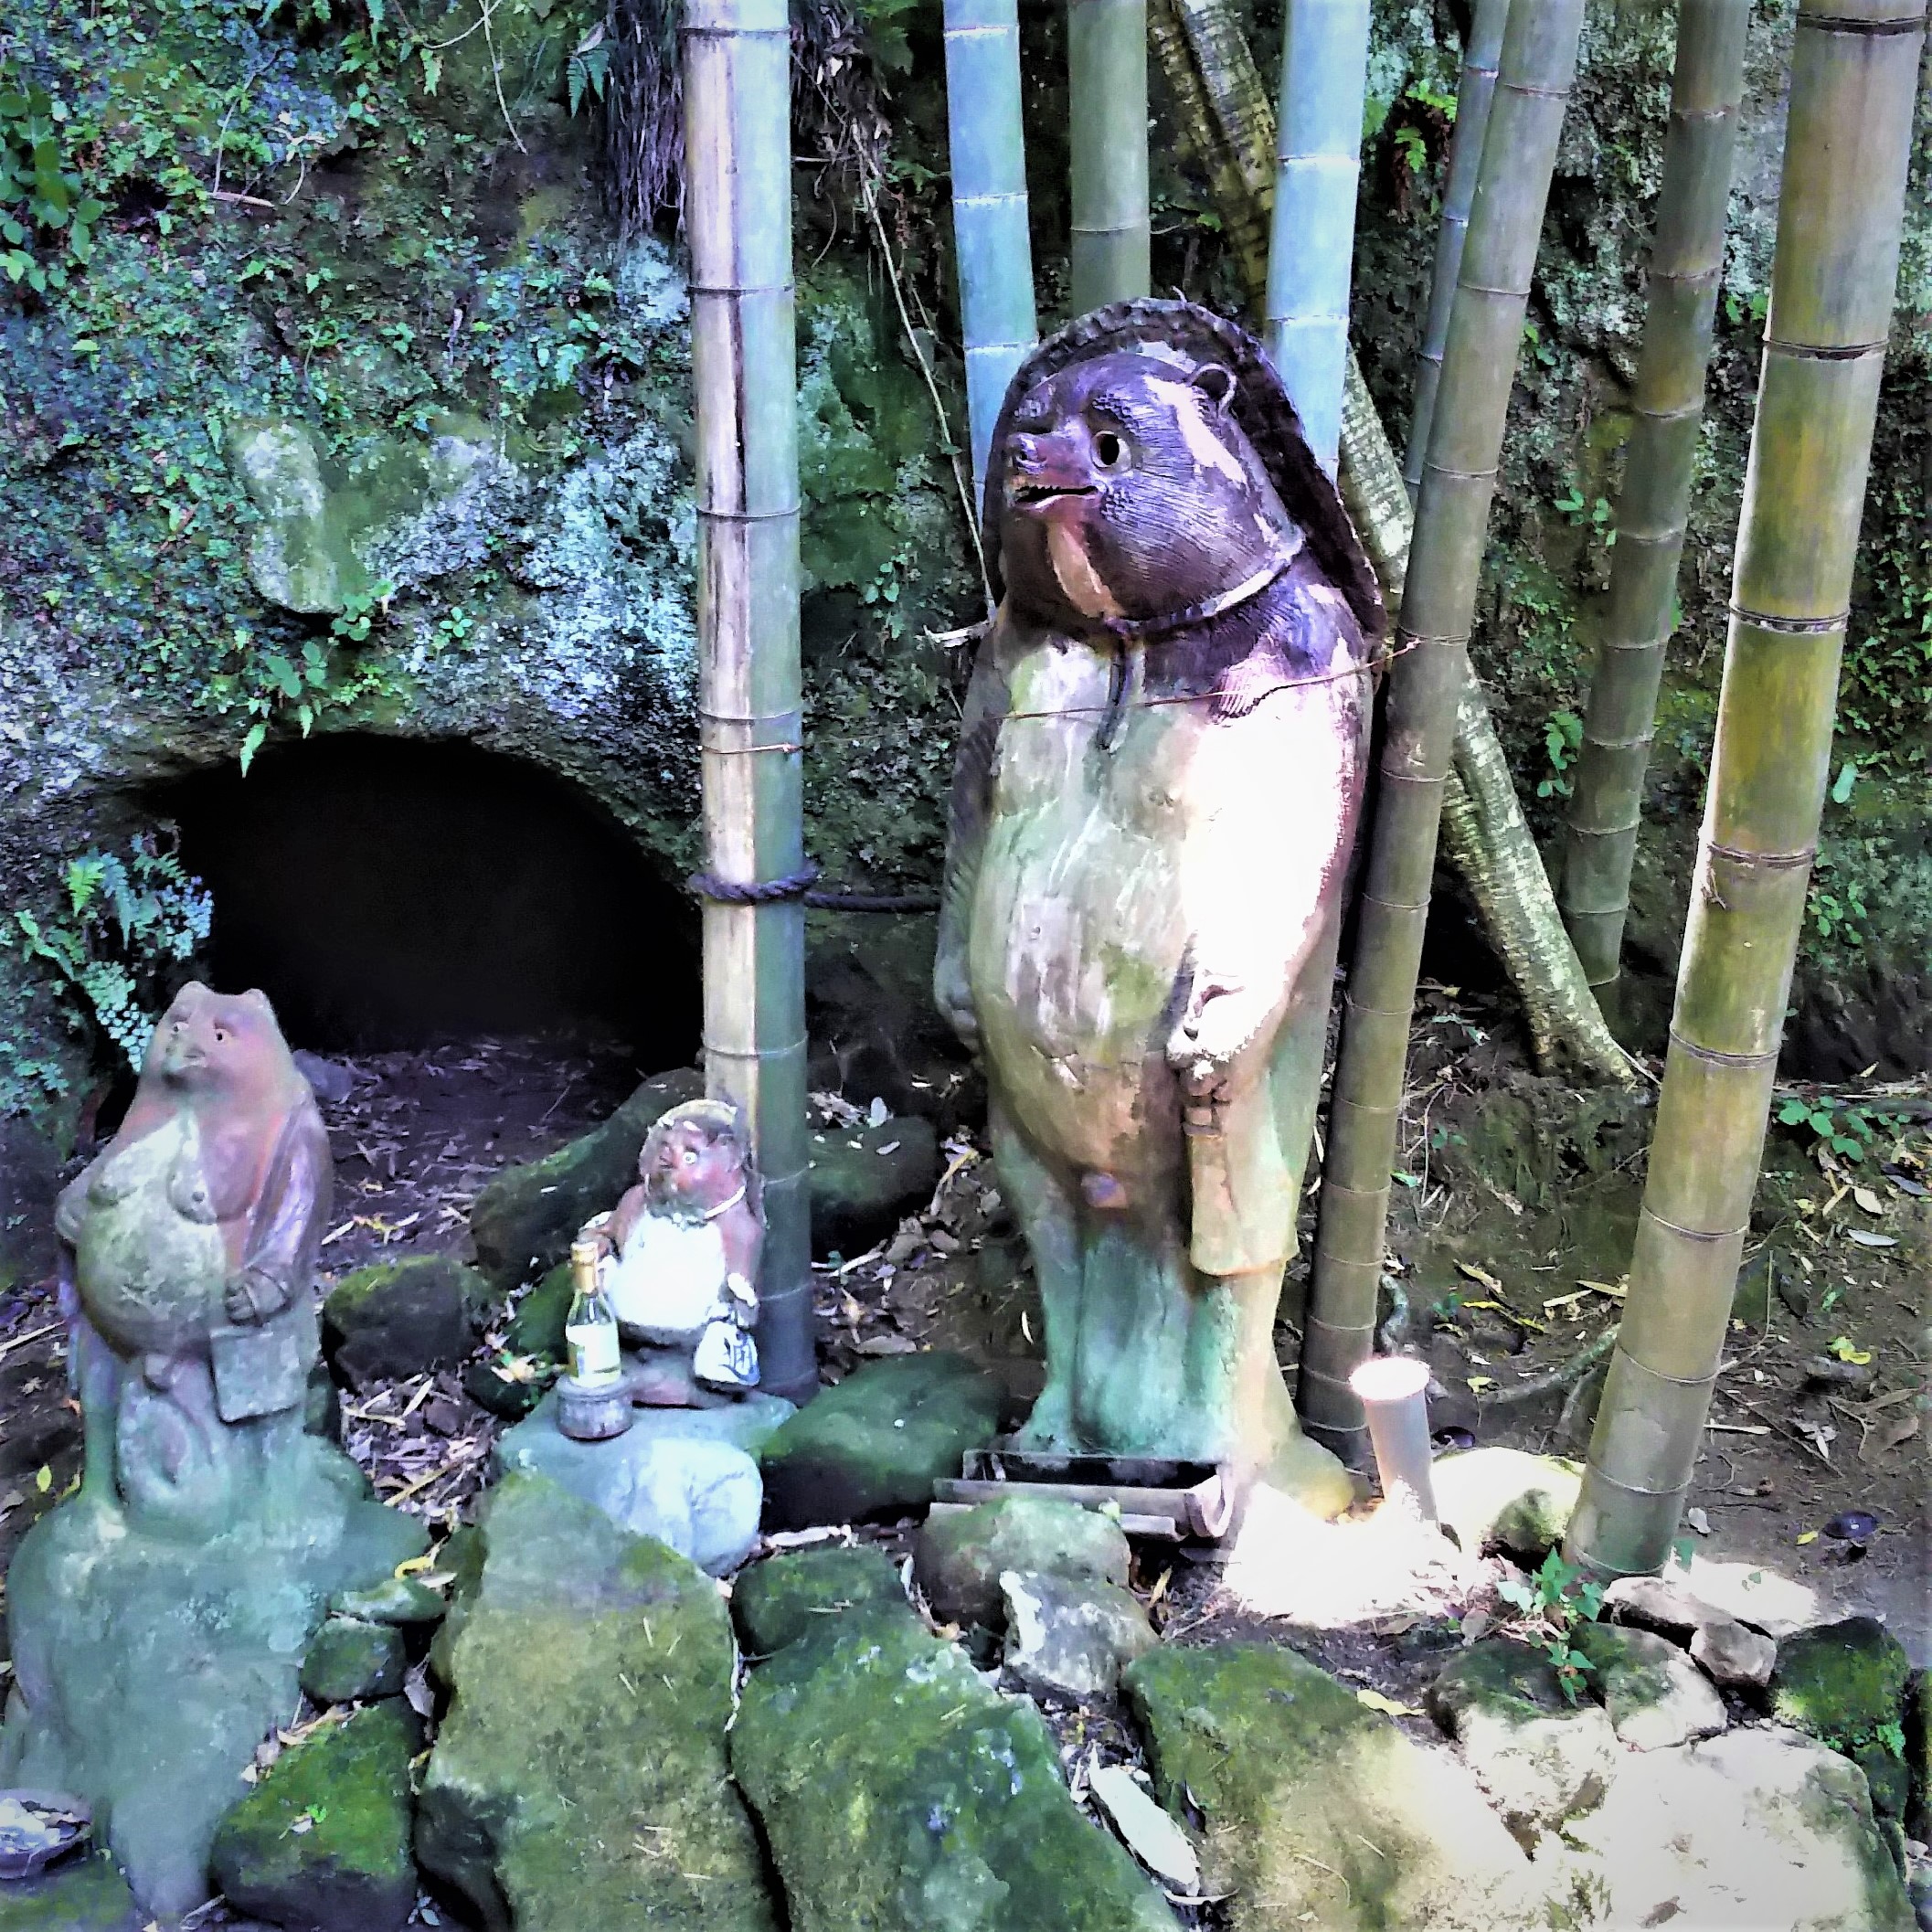 Jhochiji temple's  legendary tanuki the Japanese raccoon dog